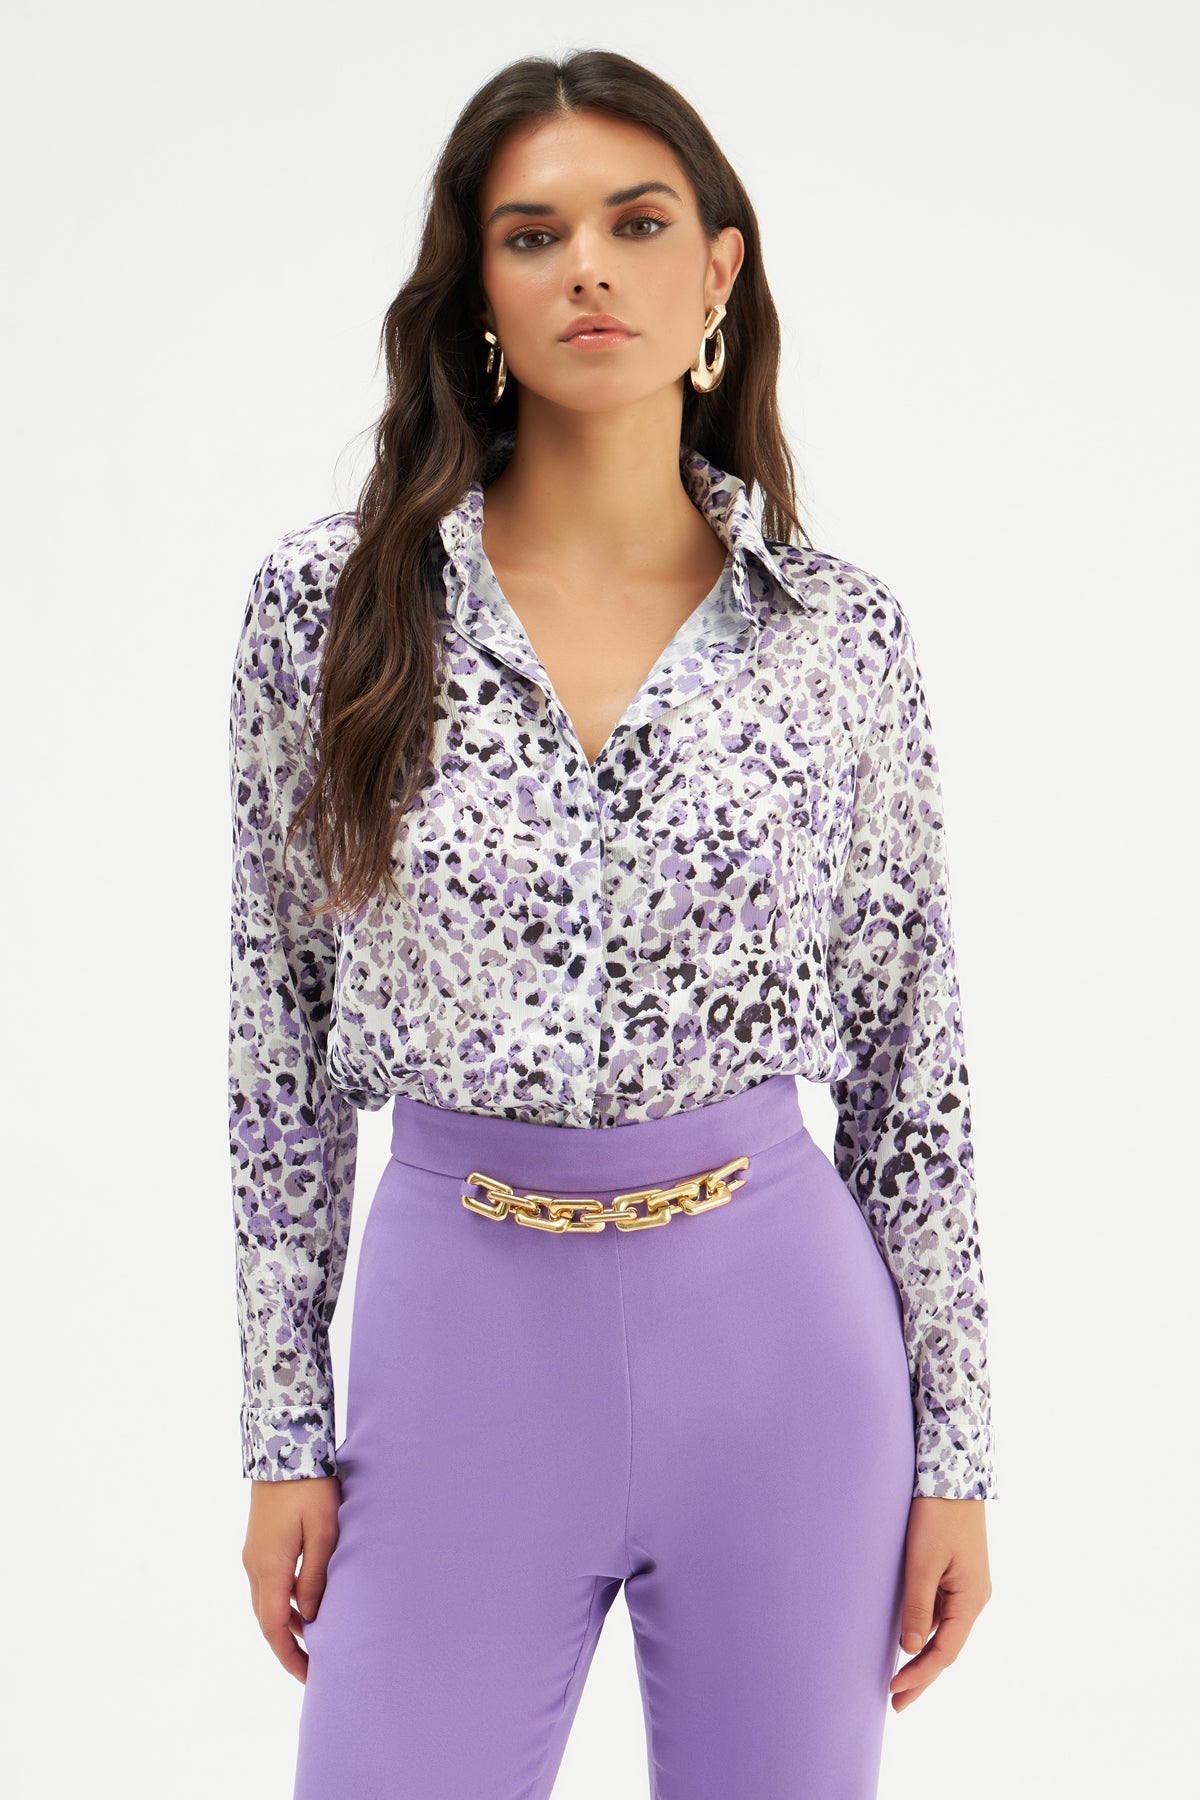 Leopard Patterned Plain Shirt - Lilac - Top - LussoCA